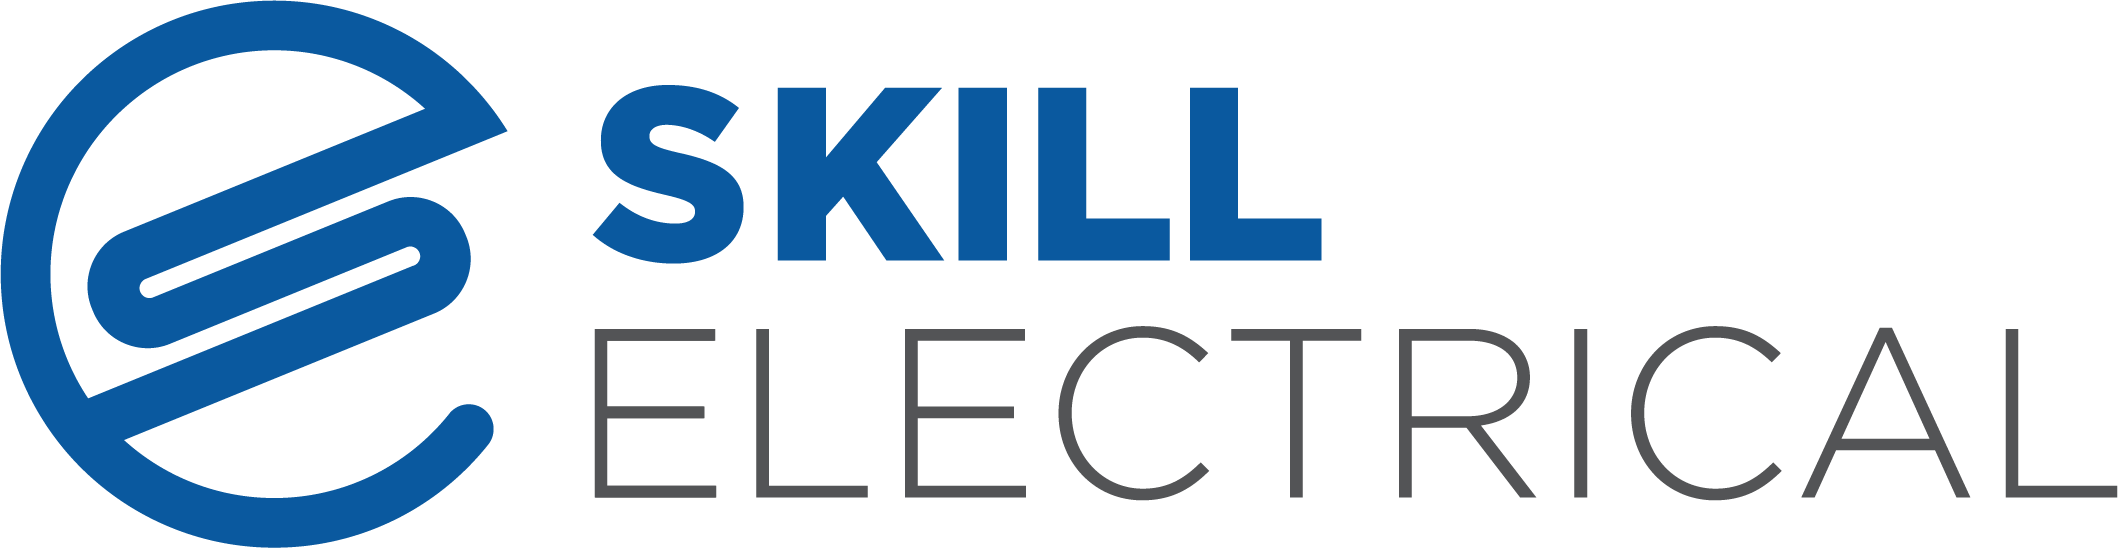 SkillElectrical - Logo2022 - Simple - Light-1